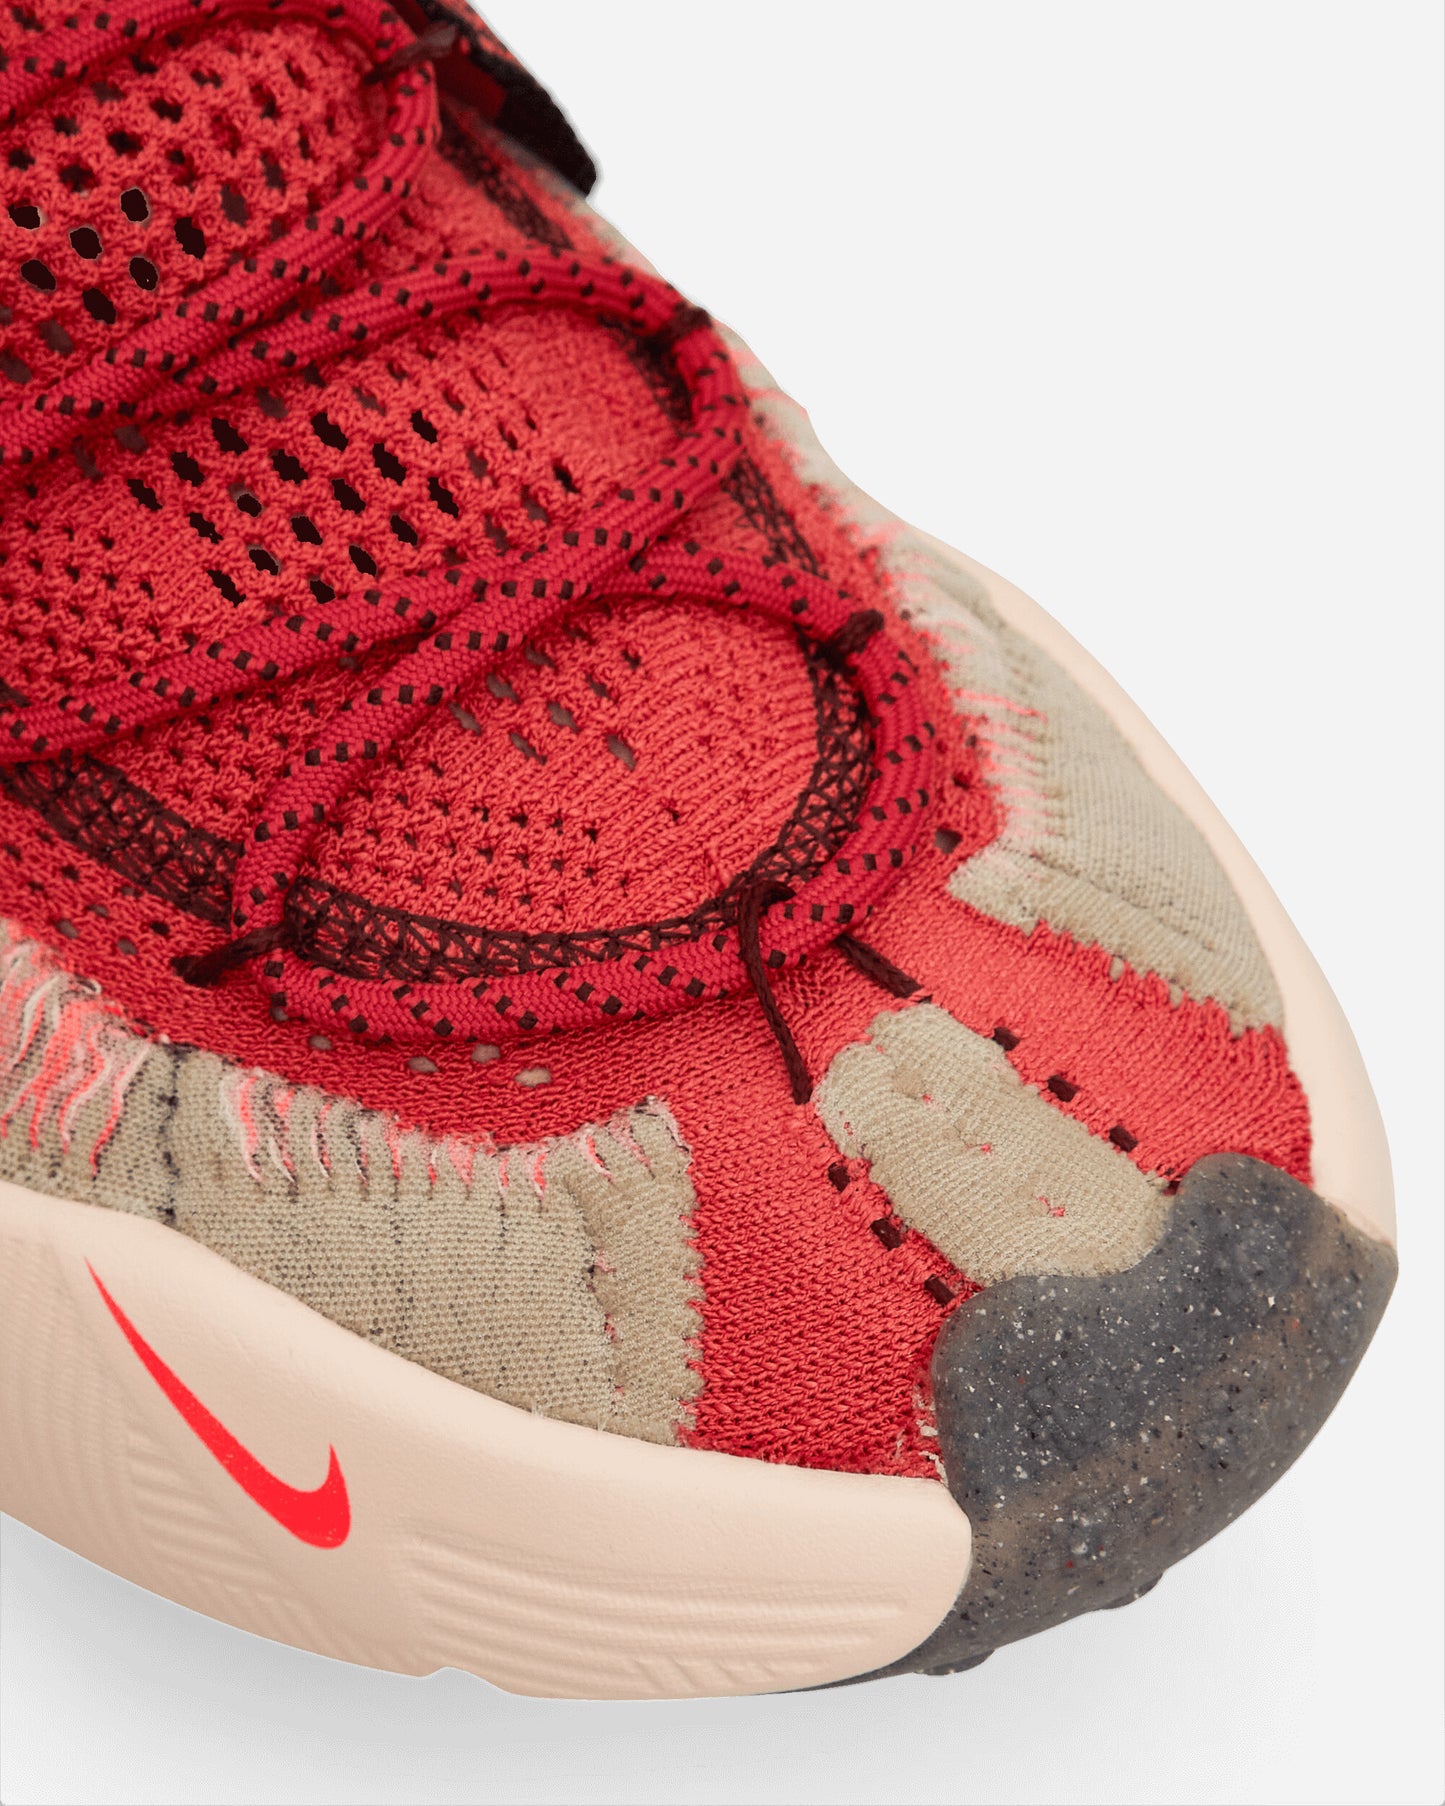 Nike Ispa Sense Flyknit Adobe/Bright Crimson Sneakers High CW3203-600